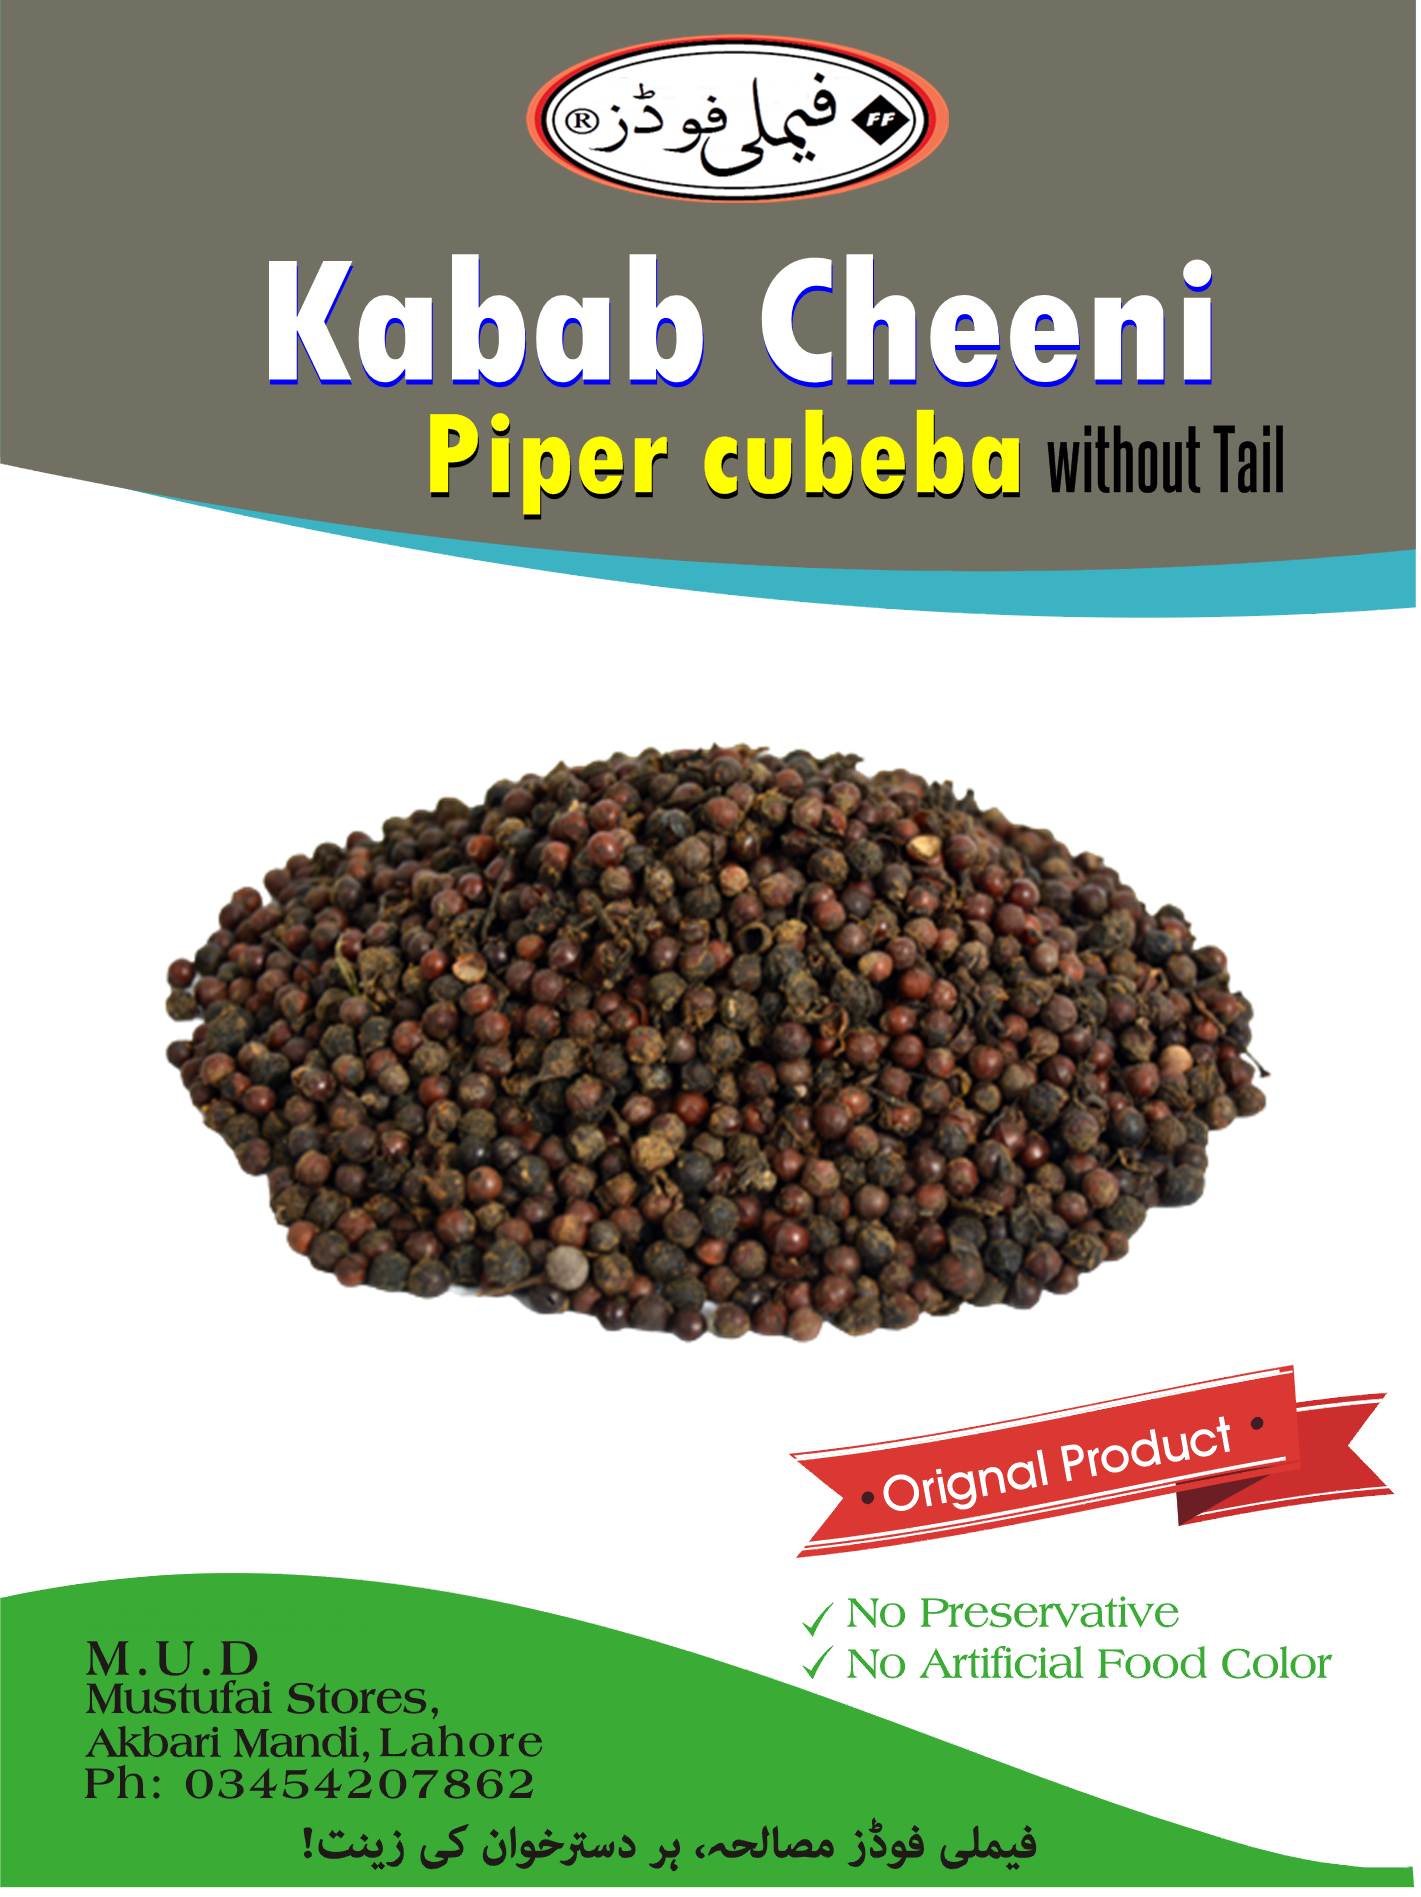 Kabab Chini (Kabab Cheeni) - Piper Cubeba - Without Tail